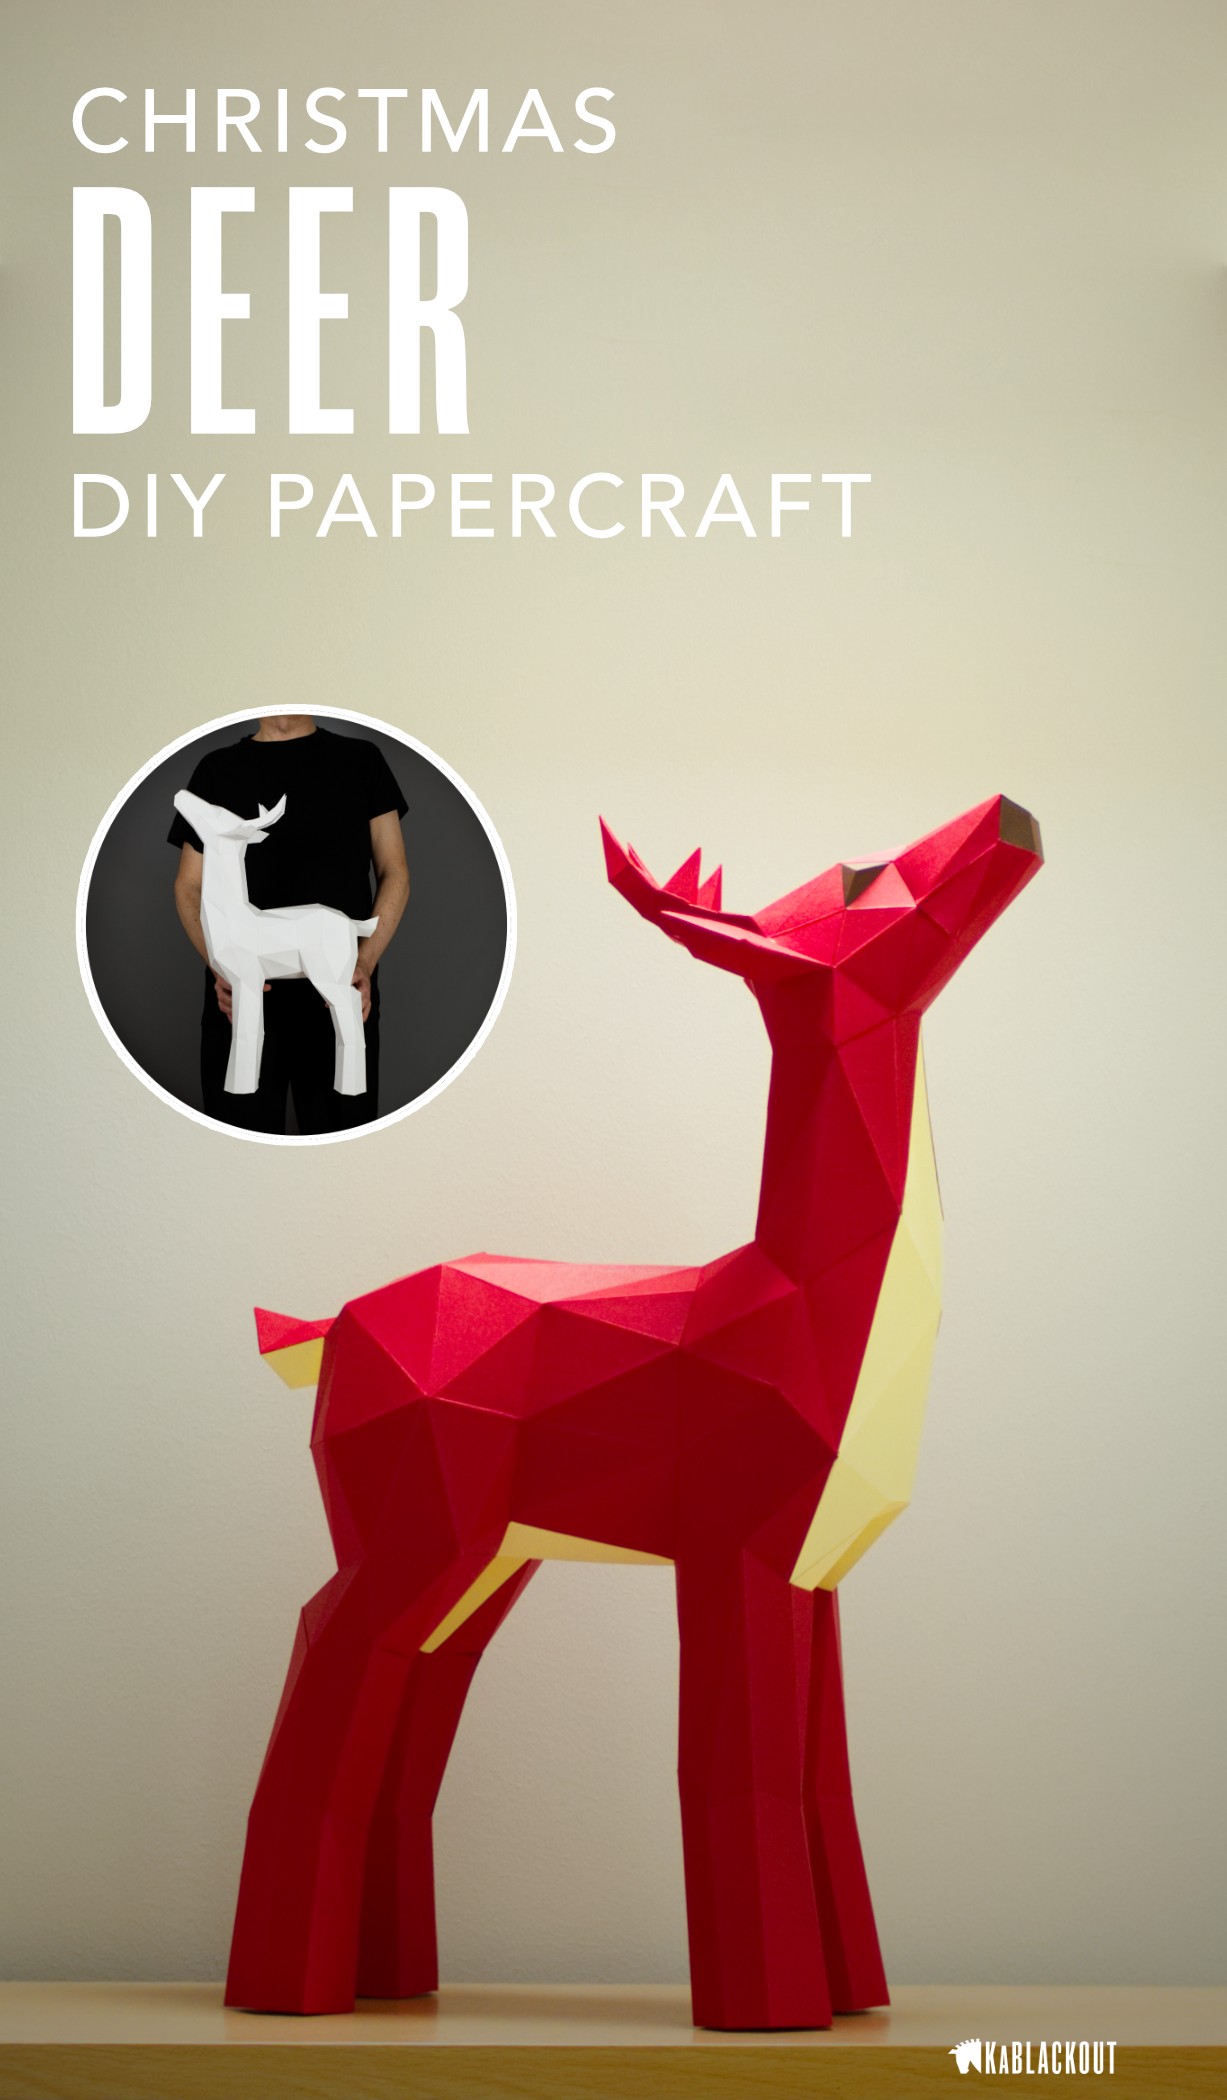 Papercraft for Christmas Deer Papercraft Papercraft Deer Diy Deer Low Poly Deer Deer